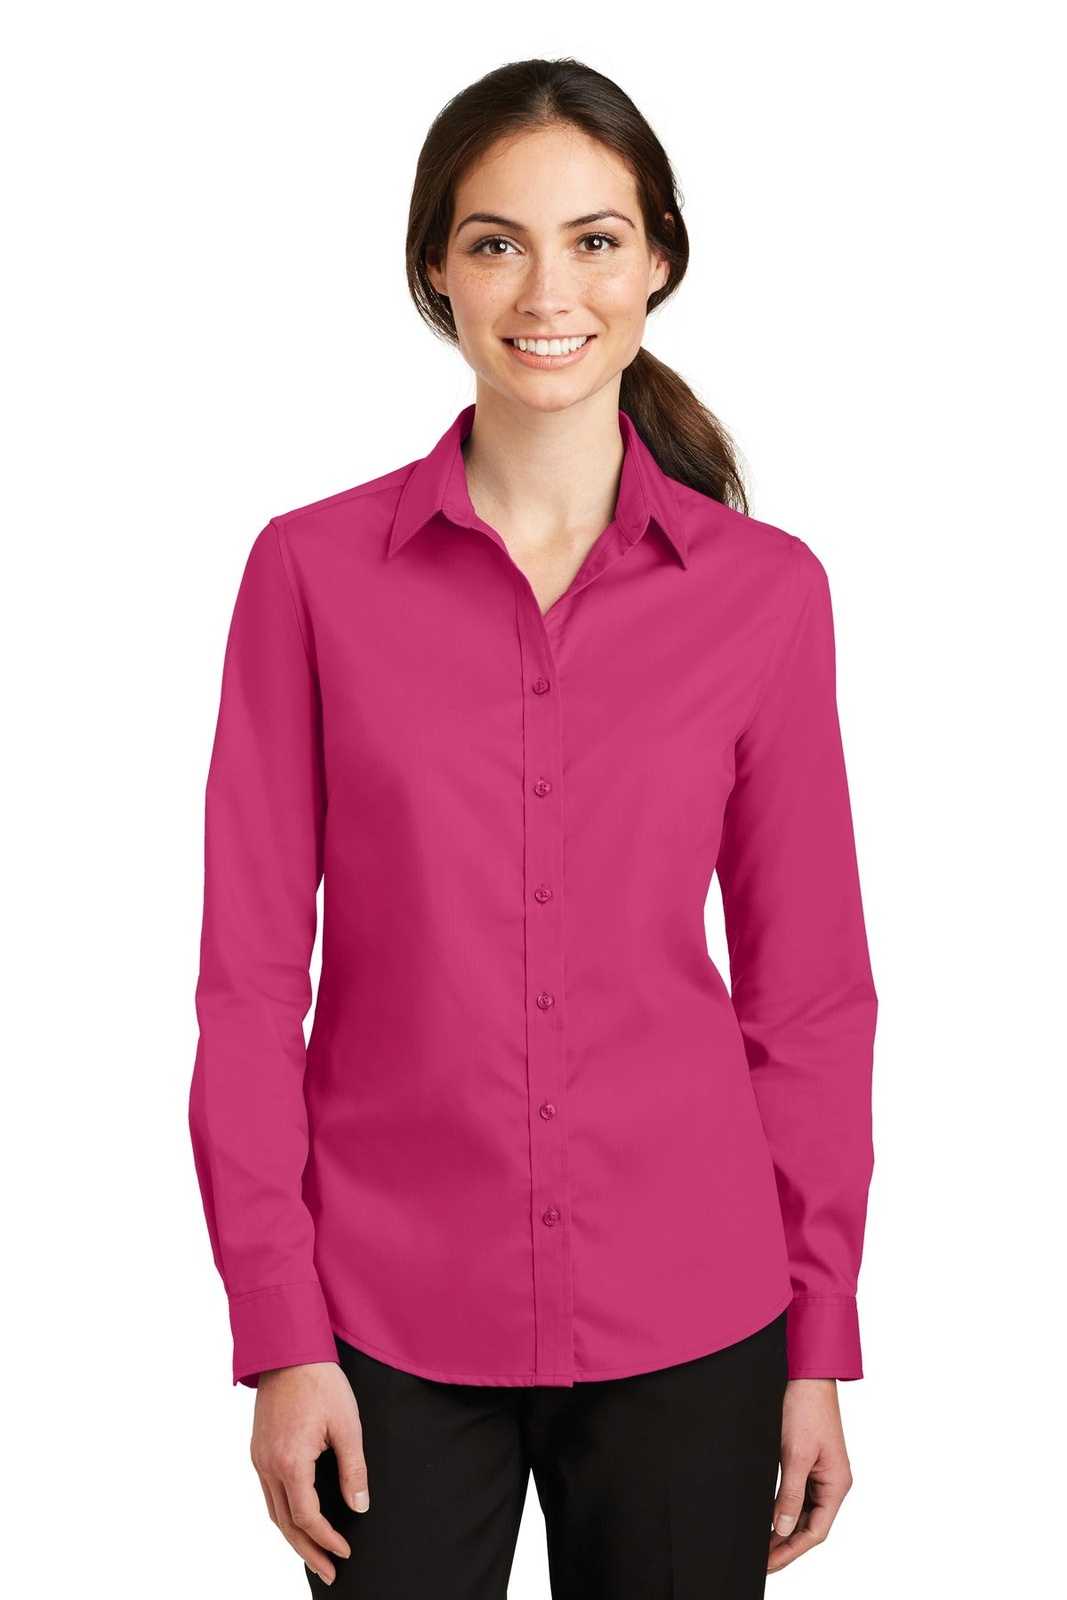 Port Authority L663 Ladies Superpro Twill Shirt - Pink Azalea - HIT a Double - 1